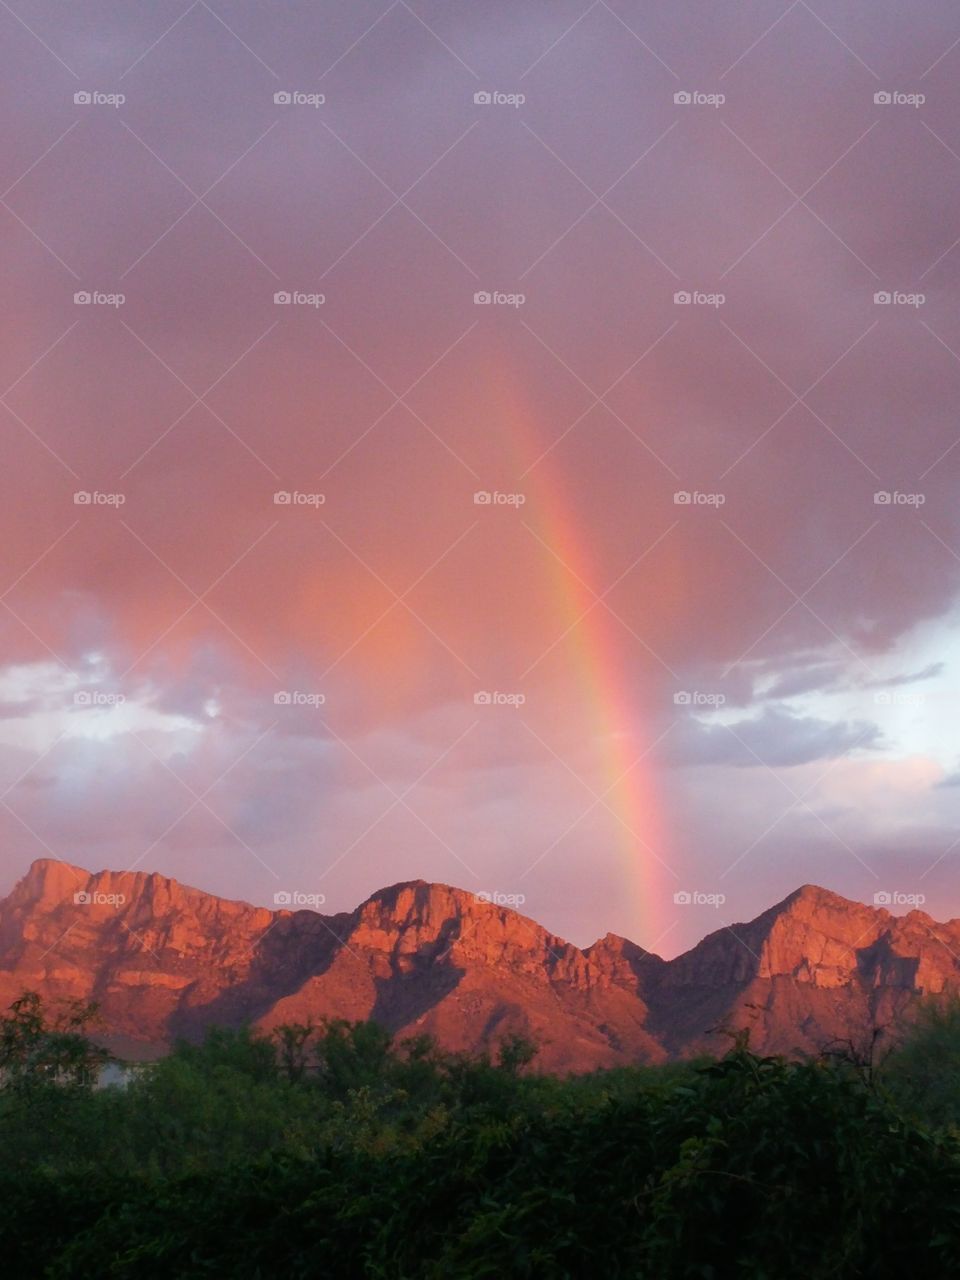 Arizona desert sunset with rainbow. Beautiful rainy sunset 